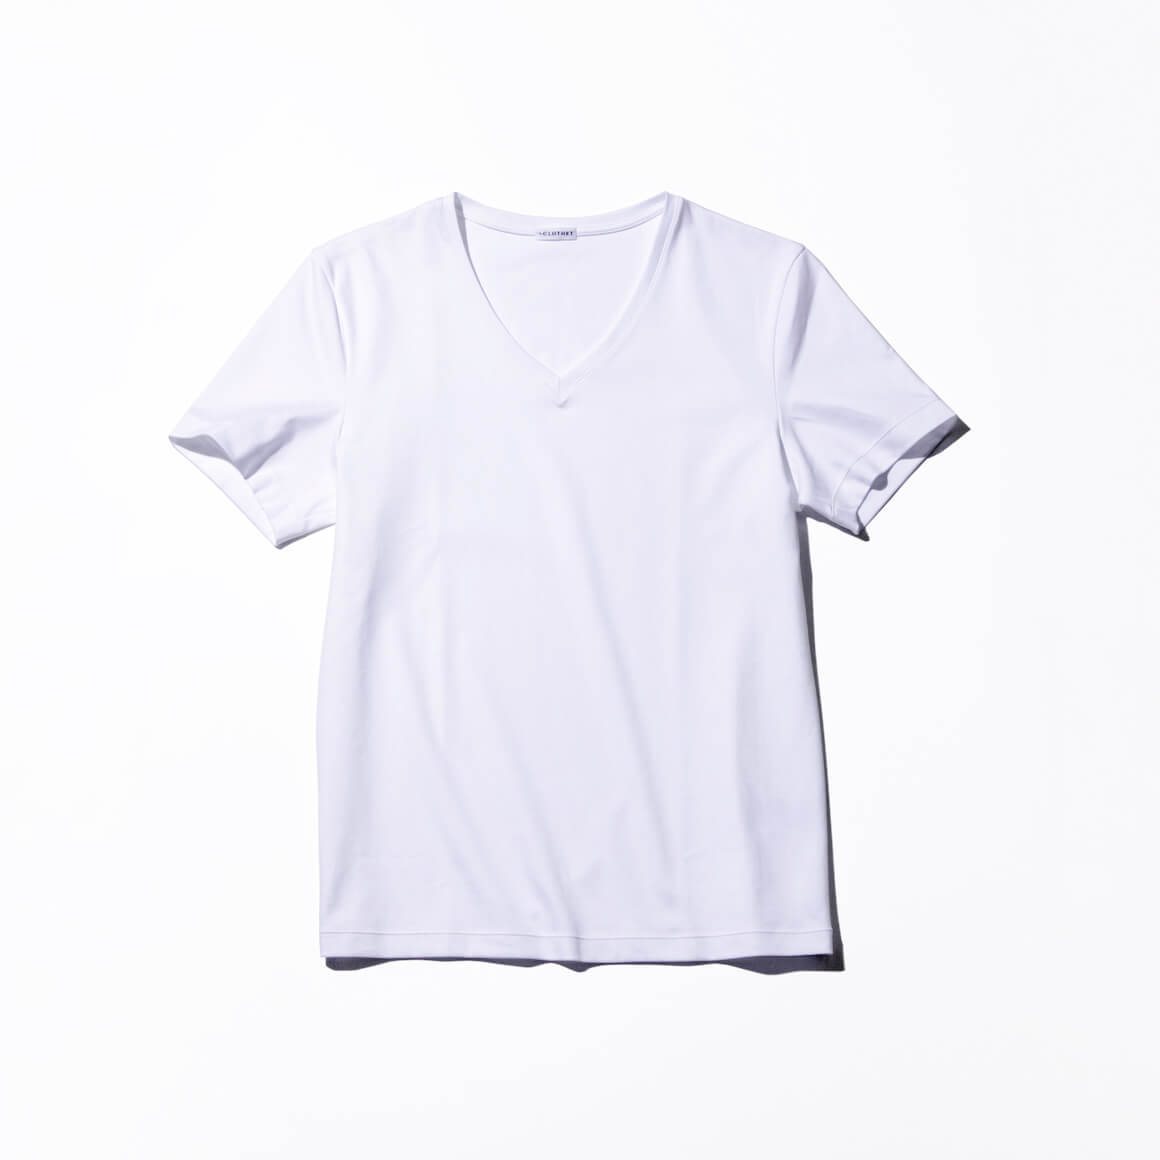 VネックTシャツ カラー：ホワイトdirected by SATOSHI NAKAMOTO – THE BAR